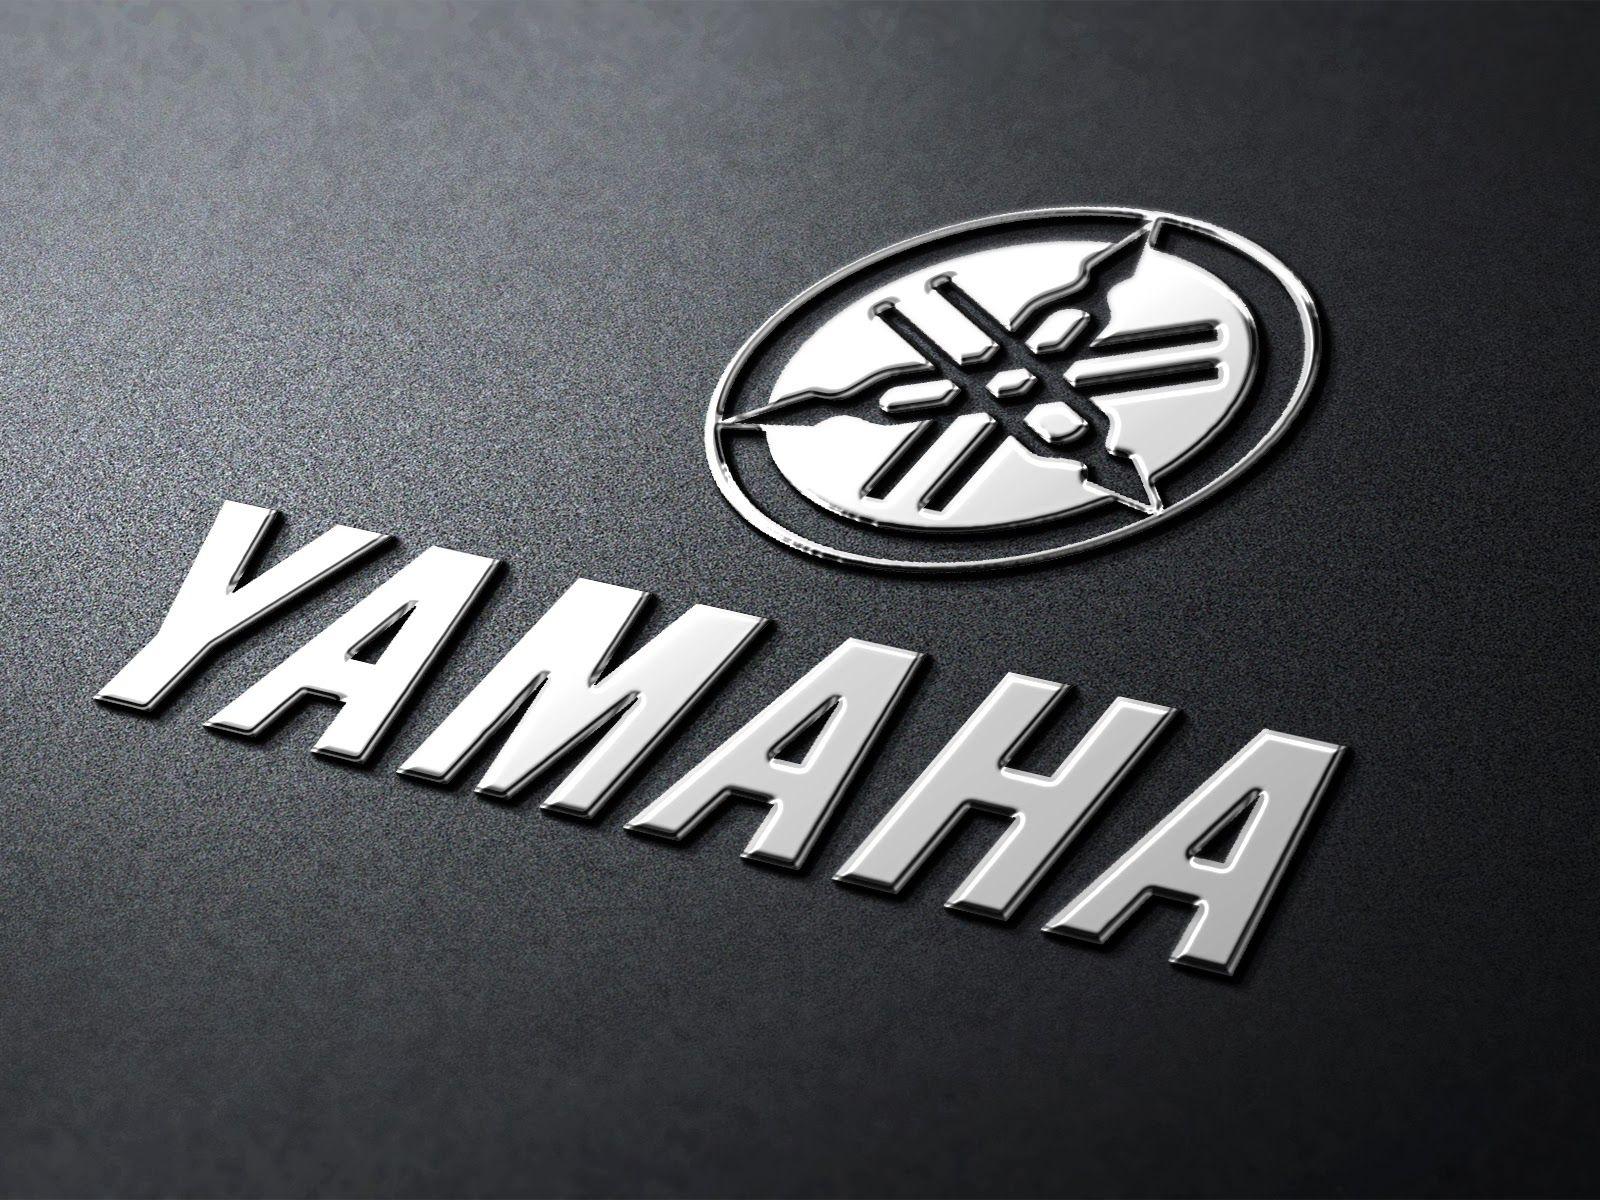 Yamaha Logo Wallpapers